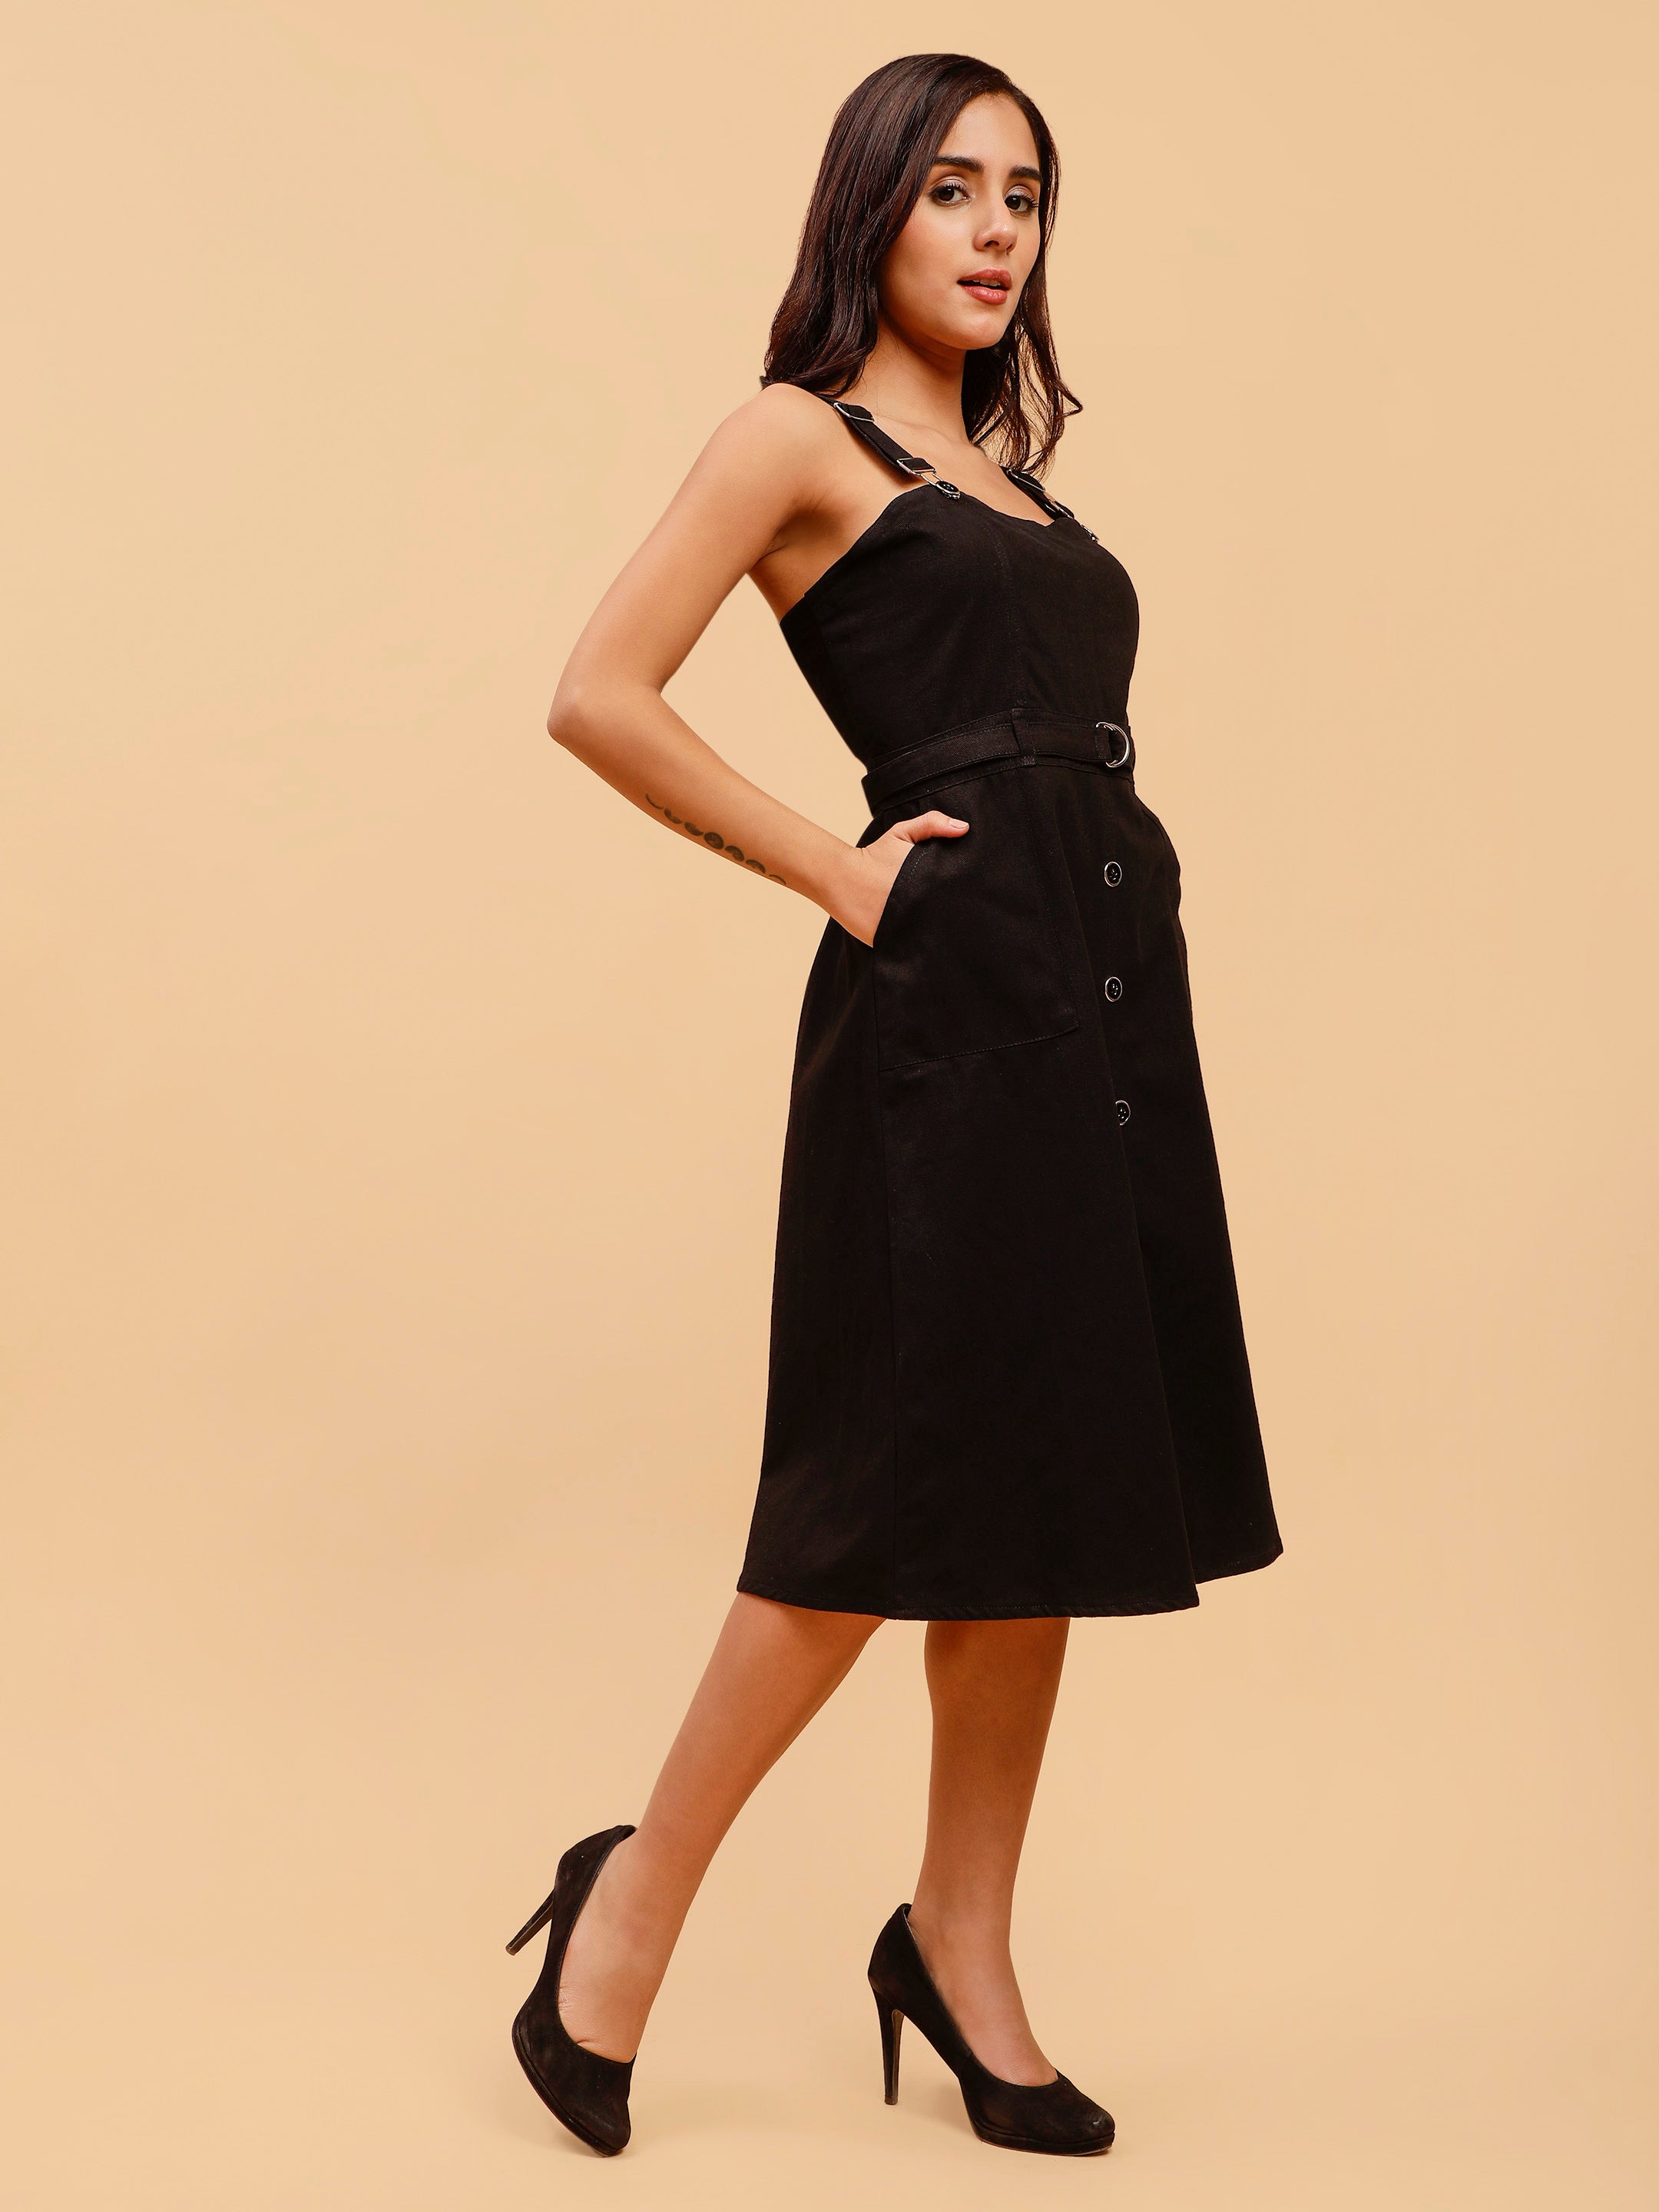 Glamoda A-Line Black Dress